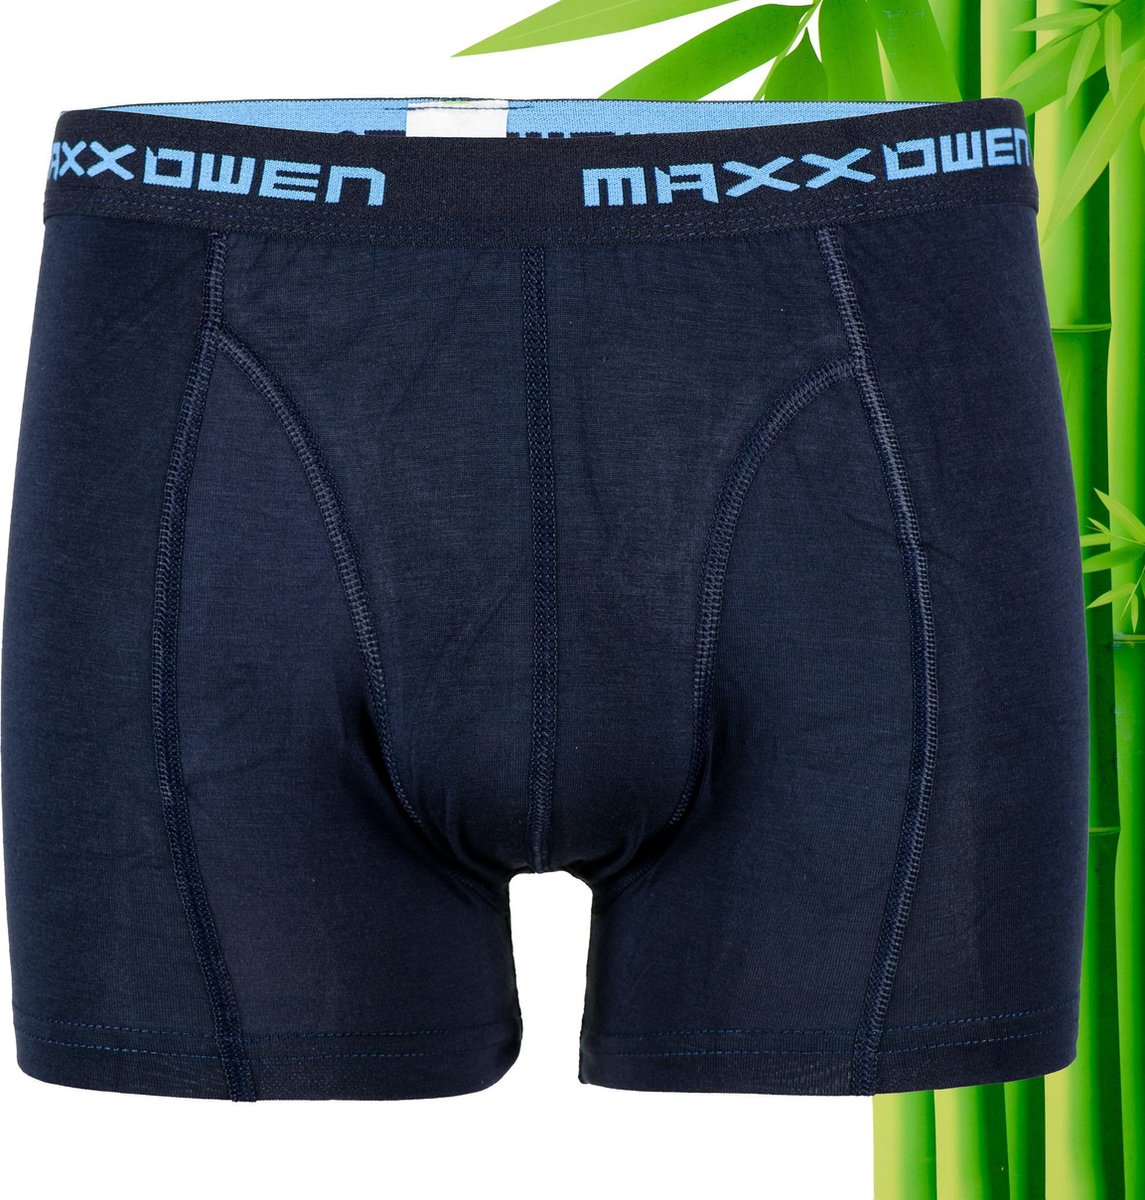 Bamboe Maxx Owen boxershorts Marine maat XL